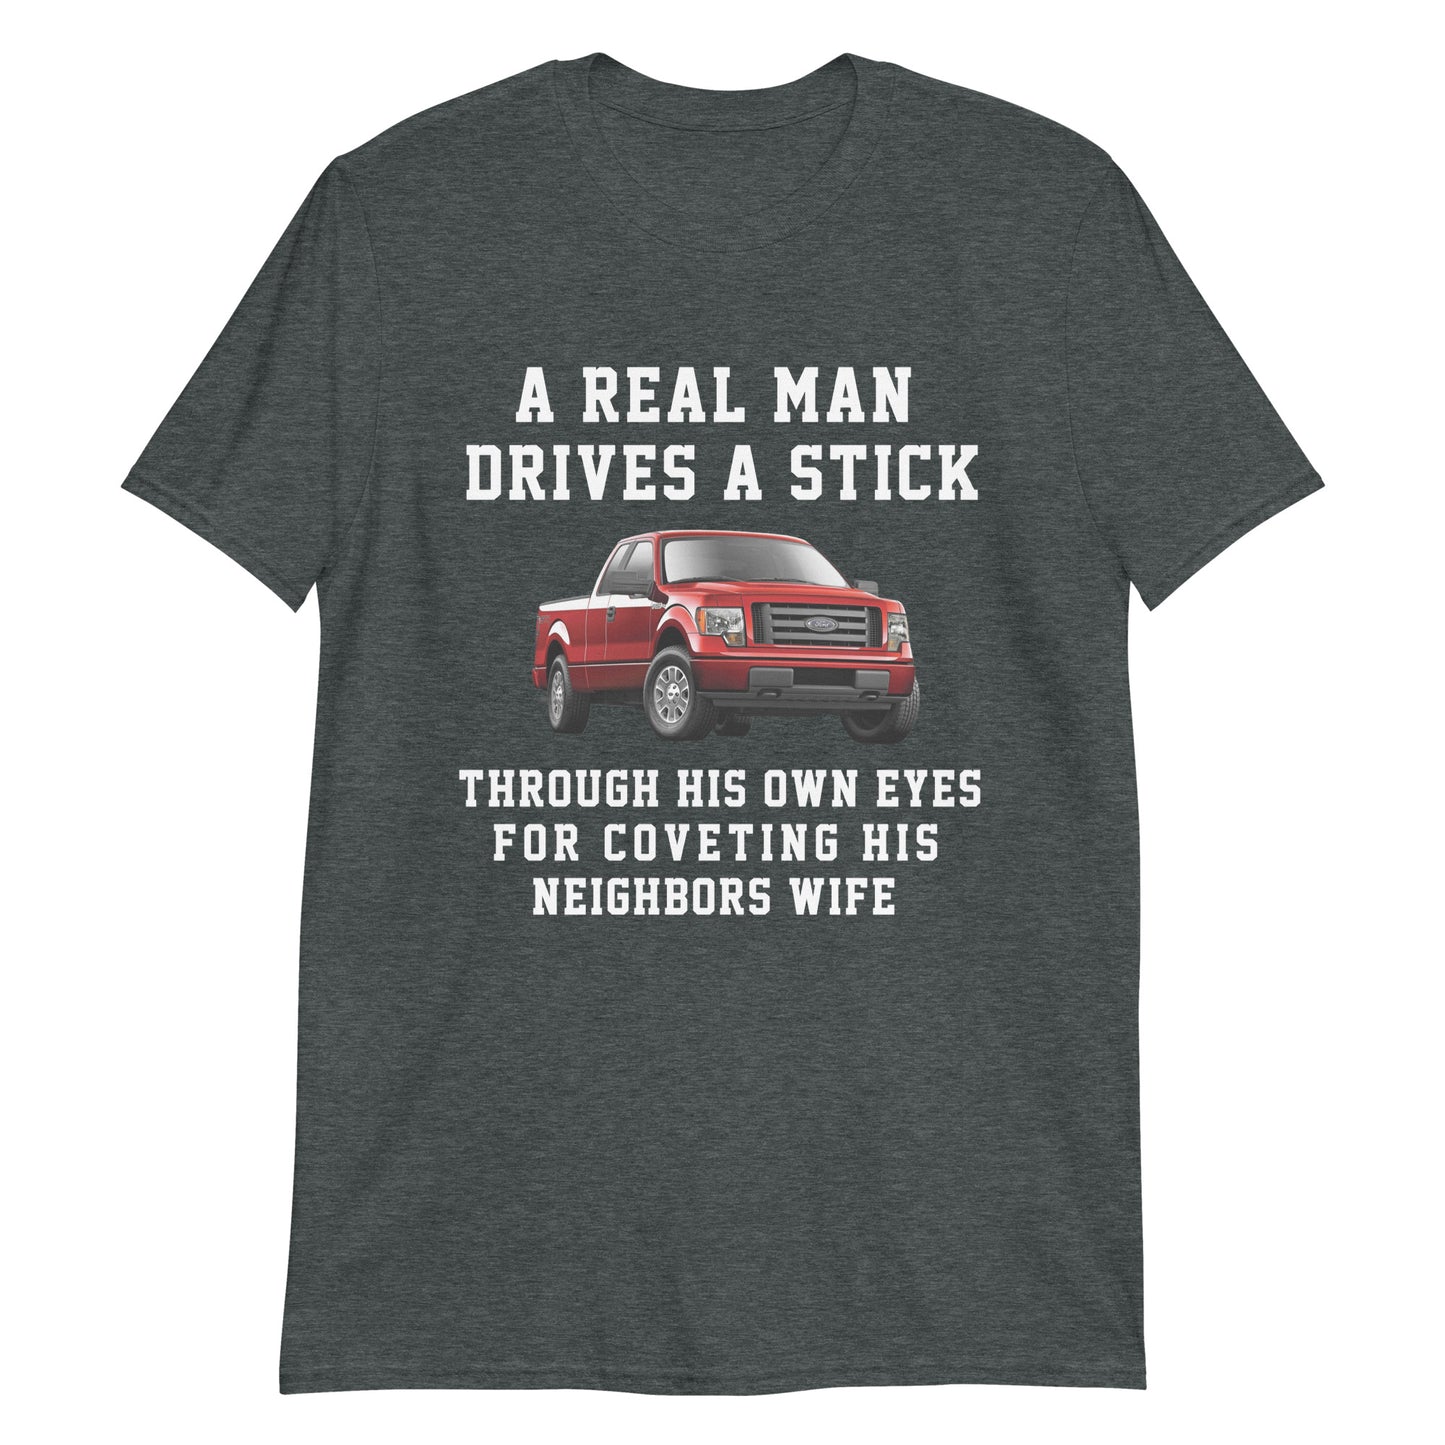 A Real Man Drives A Stick.